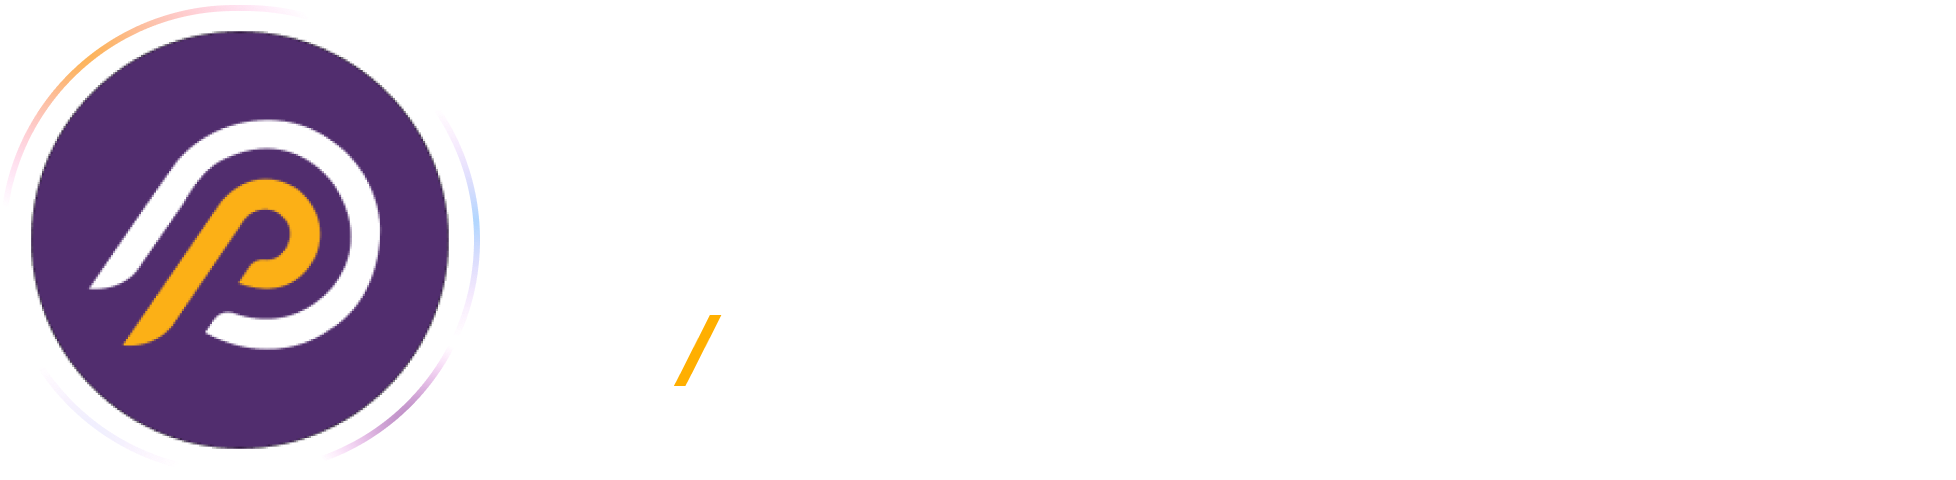 Pep Softwares logo